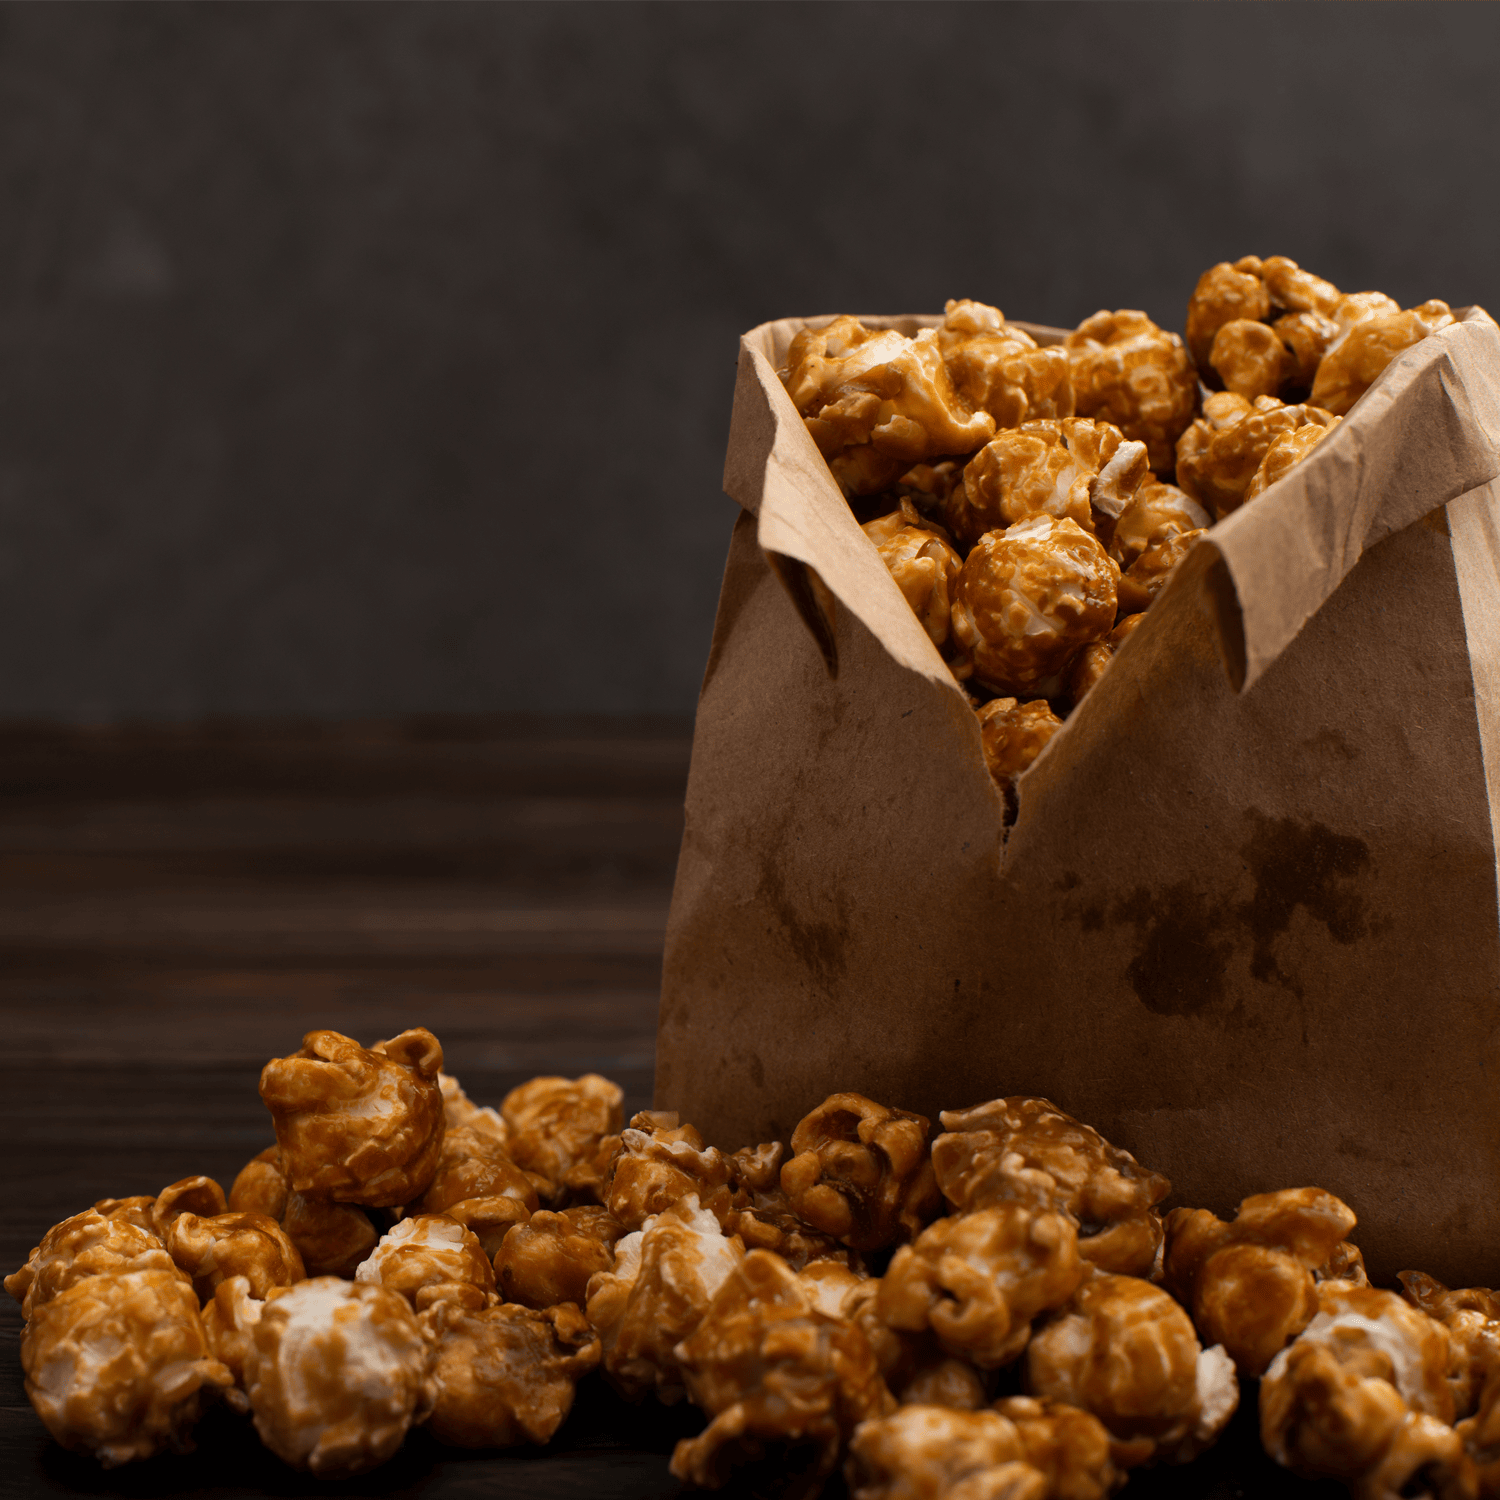 Make homemade popcorn in a brown paper bag